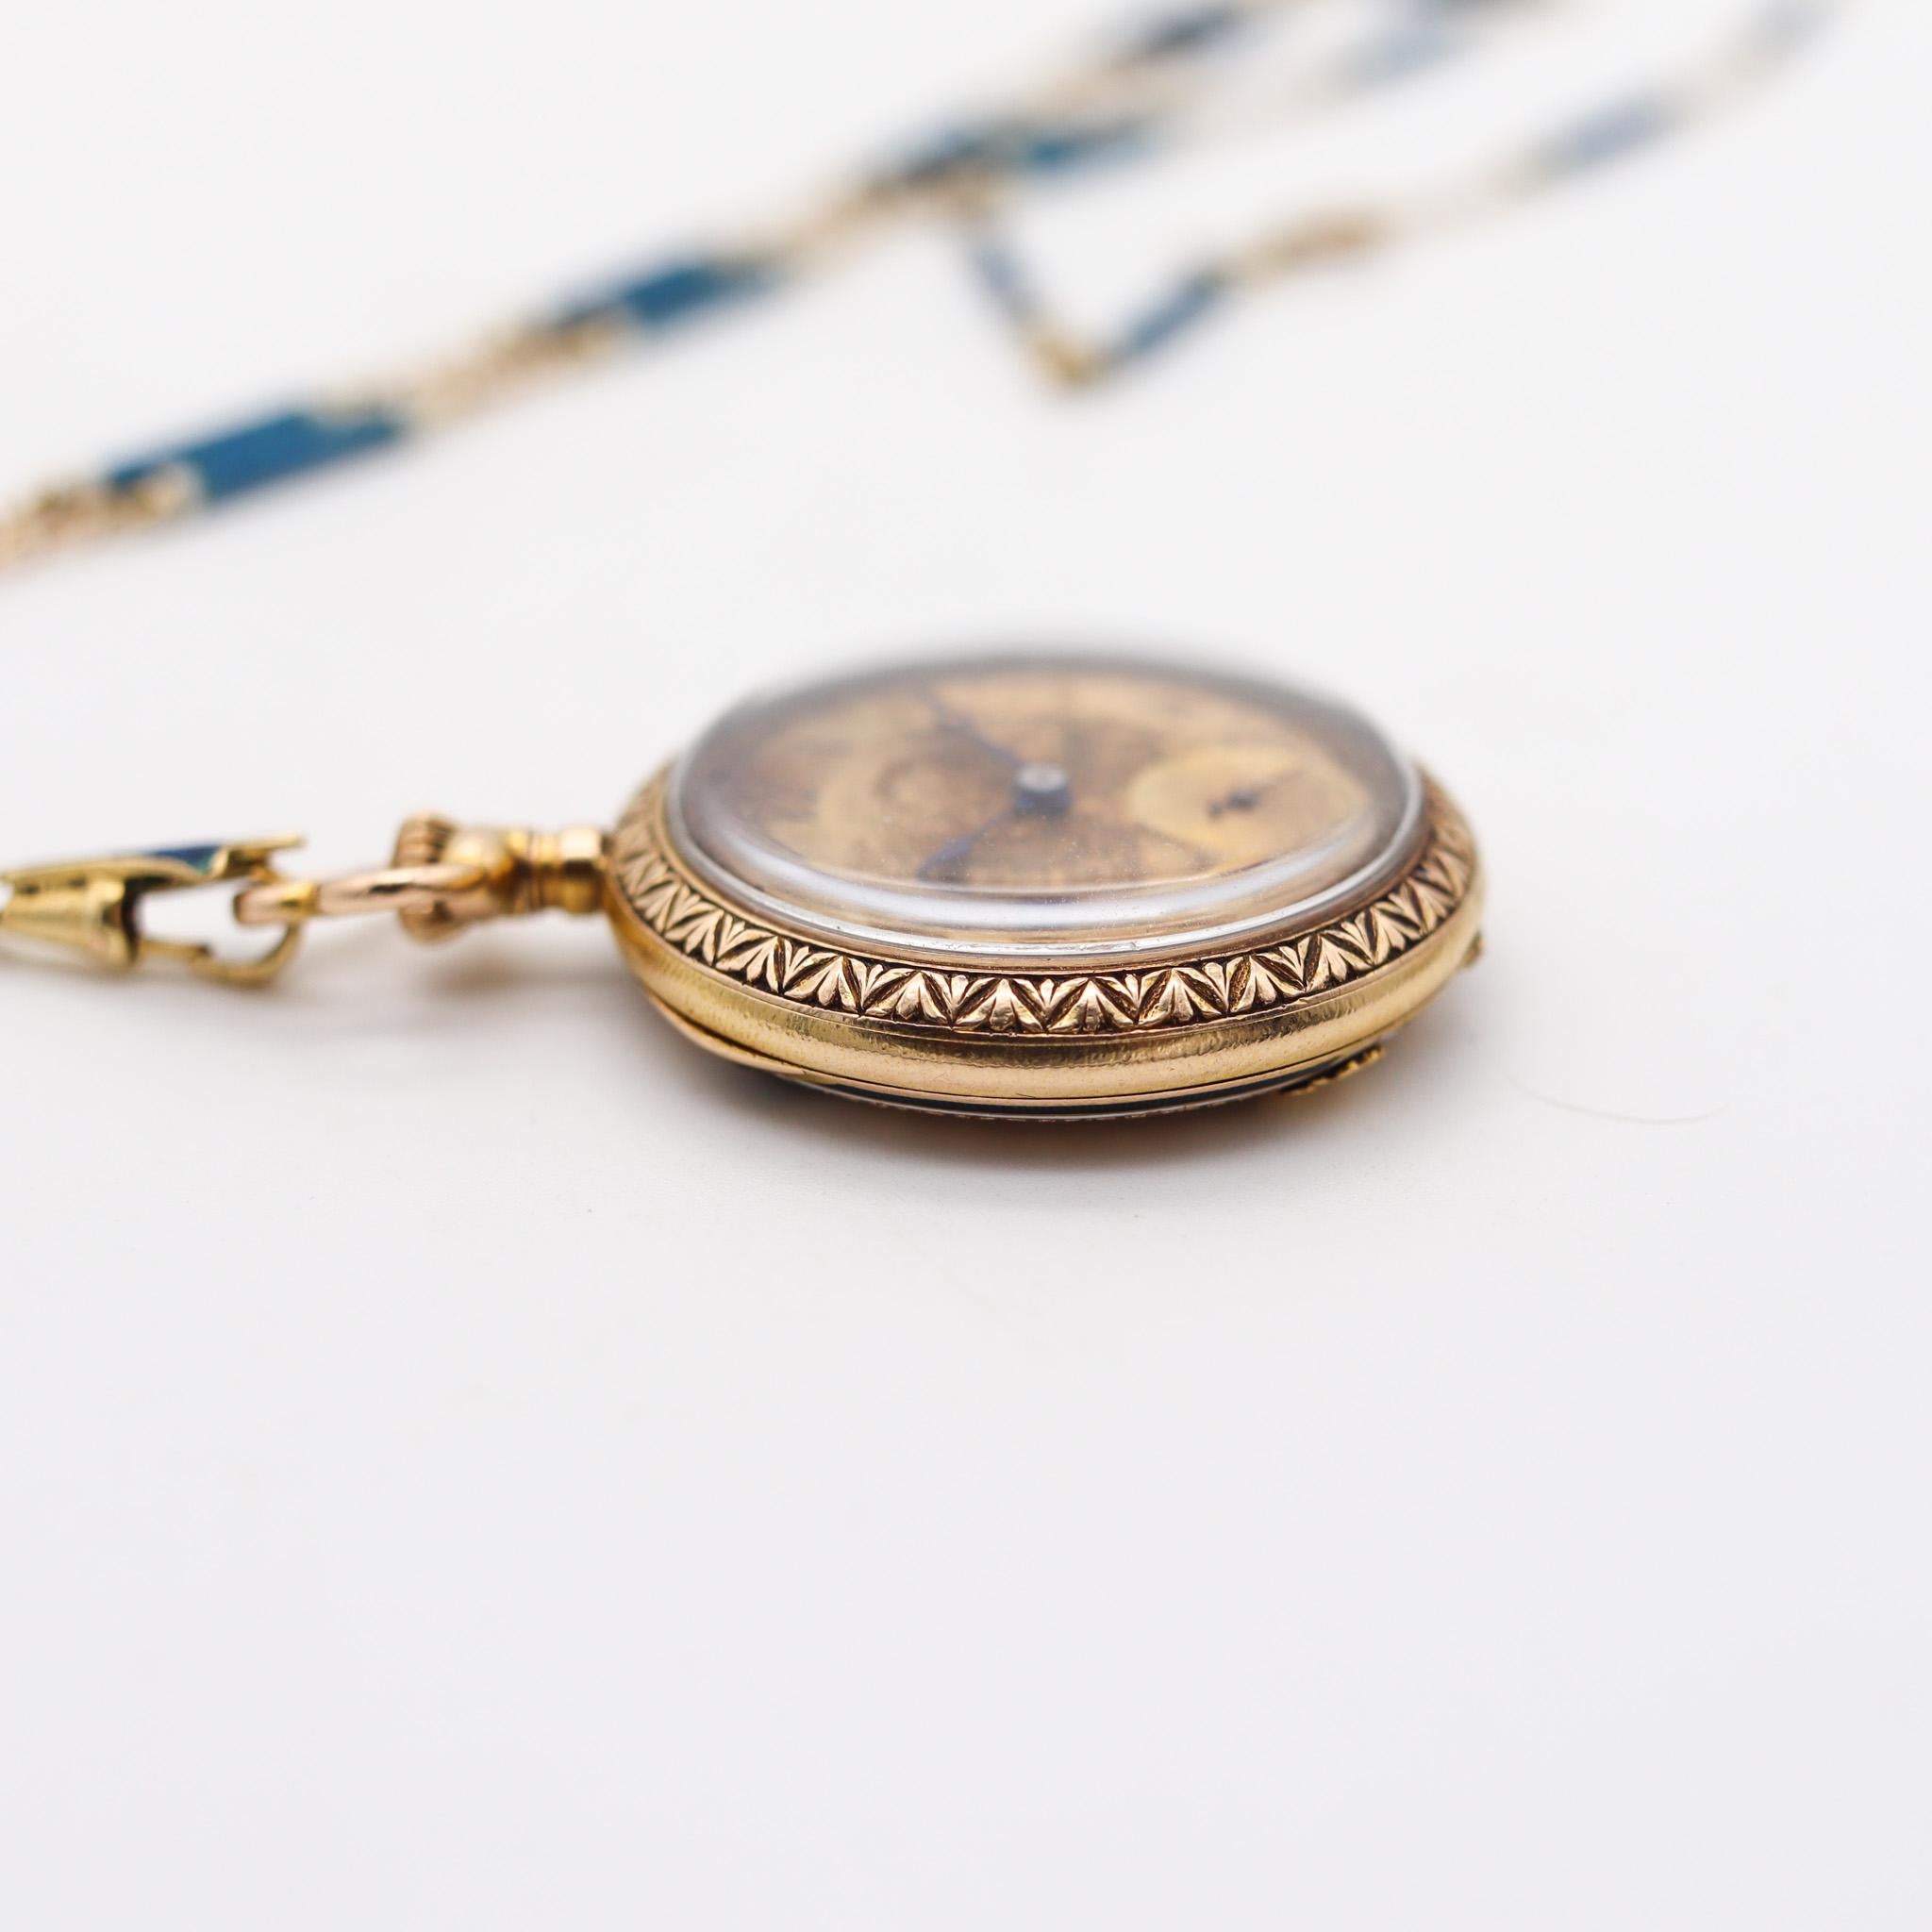 Edwardian 1903 Swiss Necklace Watch In 14Kt Gold With Guilloché Blue Enamel For Sale 2